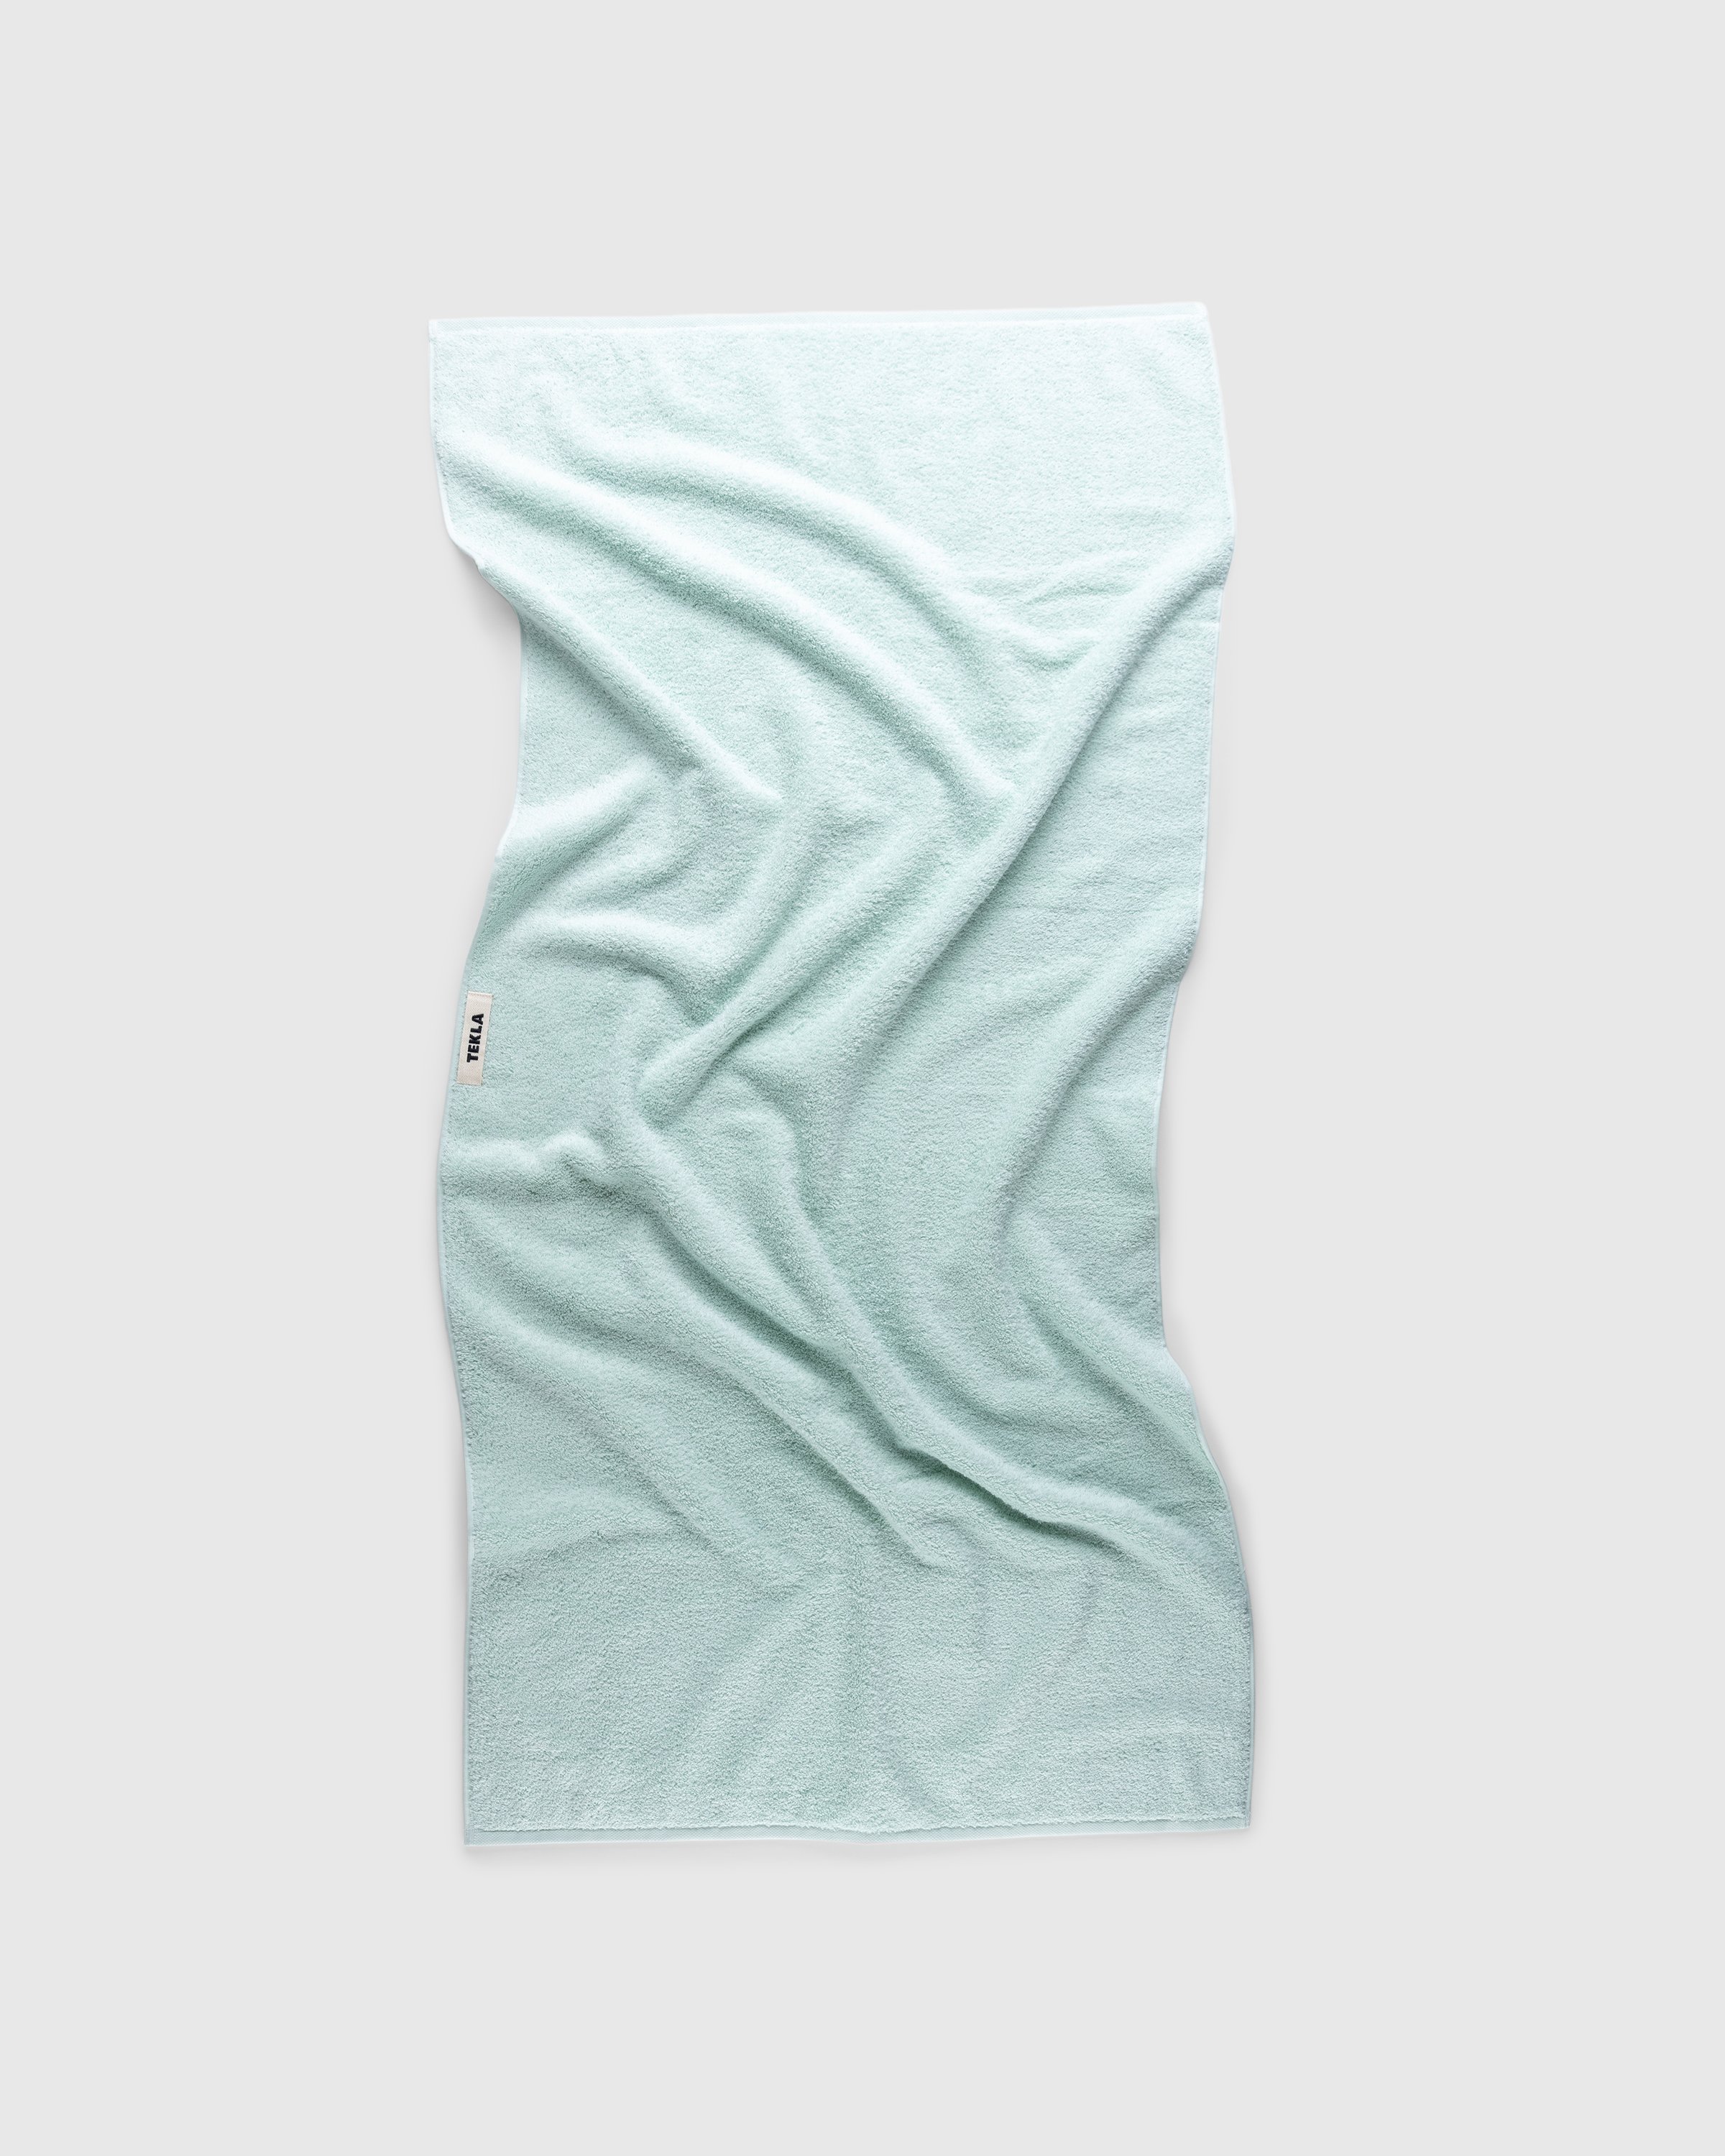 Tekla - Bath Towel Mint - Lifestyle - Green - Image 1